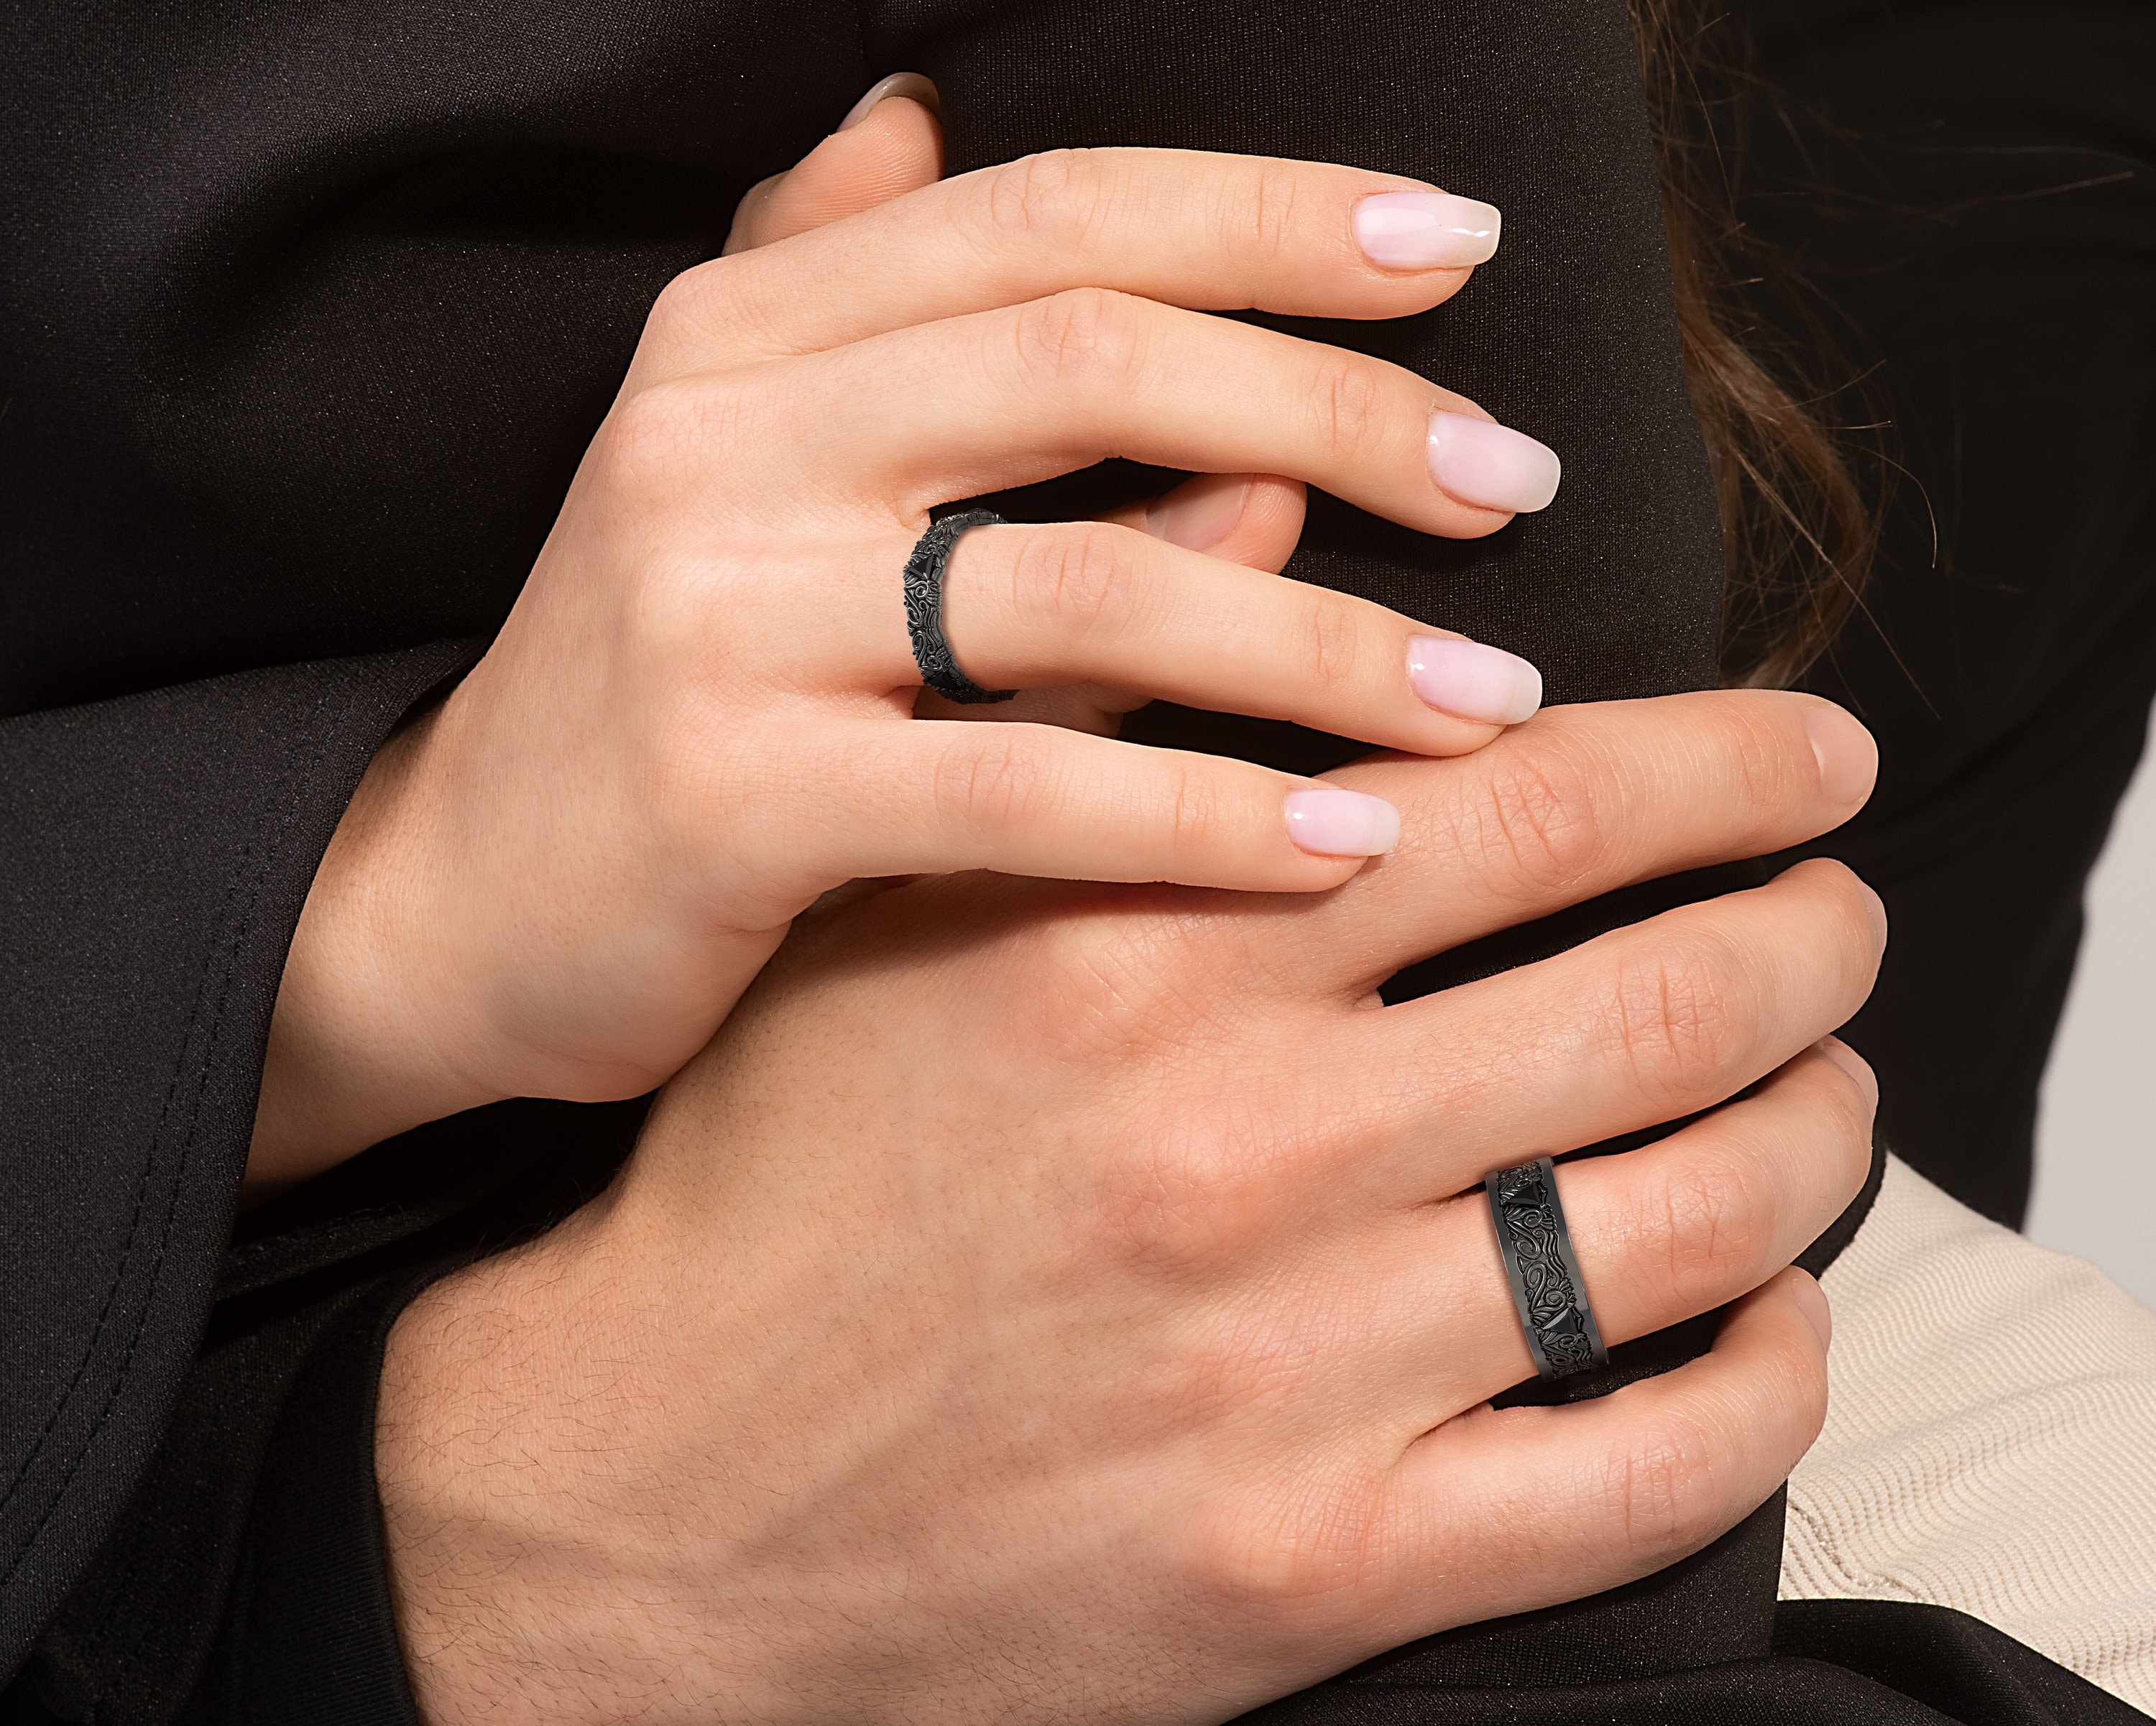 Geometric Black Onyx Ring Kite Ring Set with Women Curve Stacker Diamond  Band